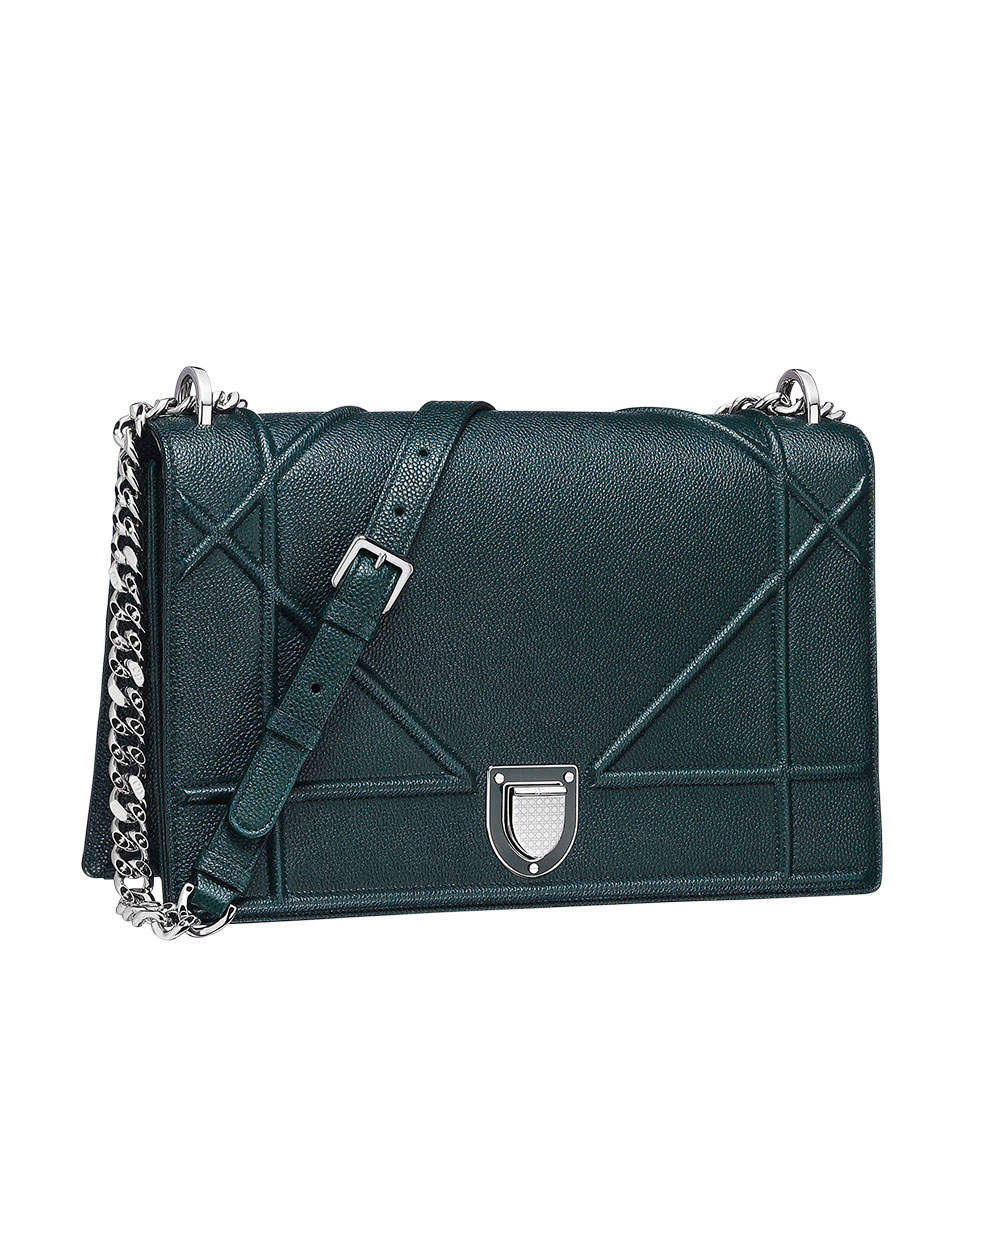 Christian Dior bag, $4,700.